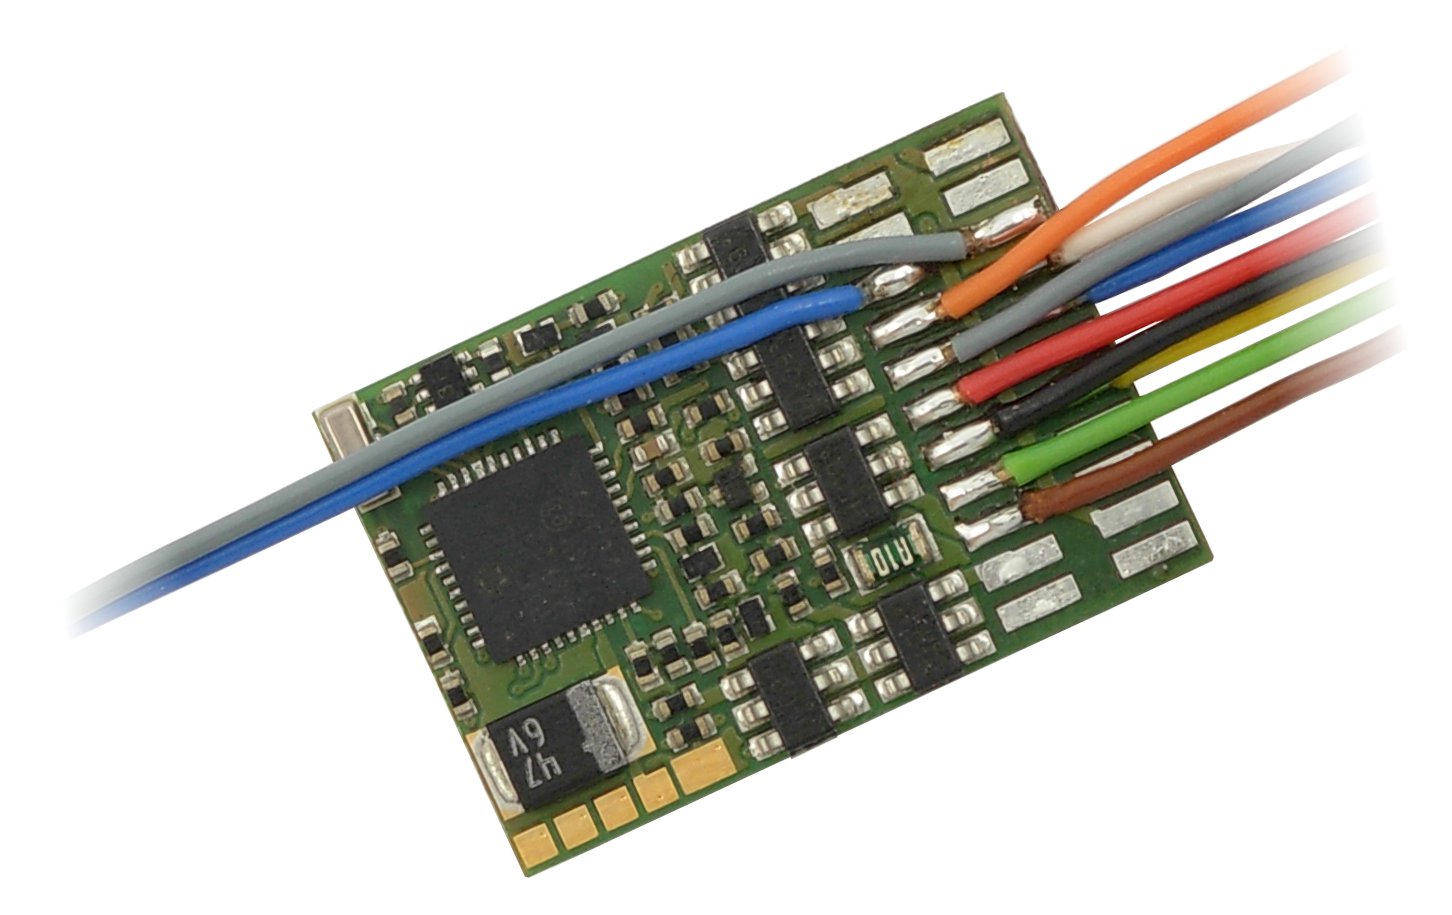 Zimo MX633F As MX633 with wired 6 pin NEM 651 plug